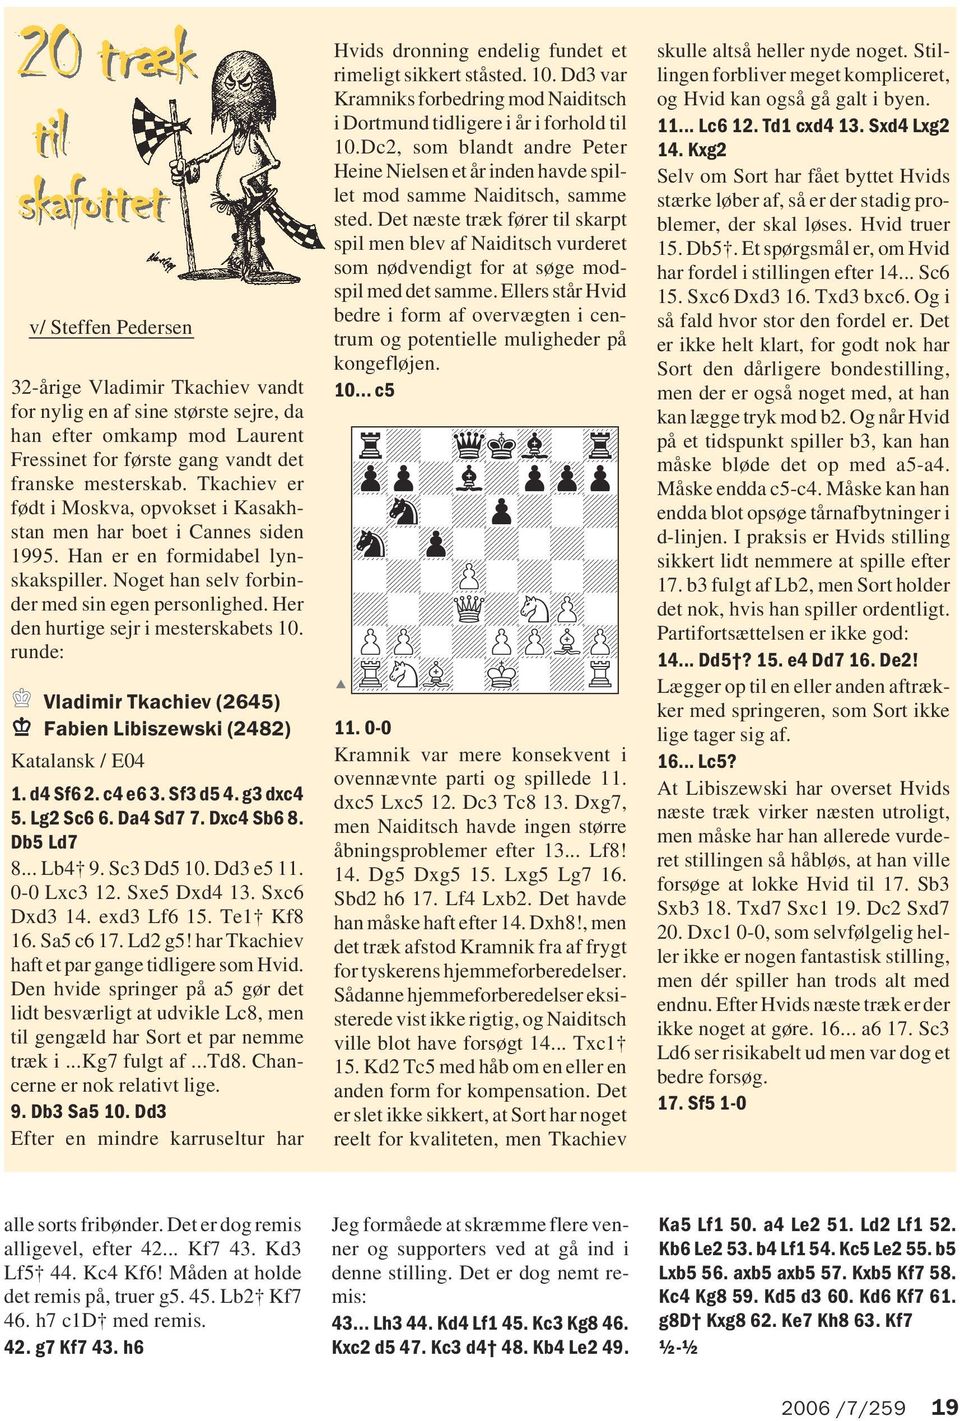 Her den hurtige sejr i mesterskabets 10. runde: Vladimir Tkachiev (2645) abien Libiszewski (2482) Katalansk / E04 1. d4 Sf6 2. c4 e6 3. Sf3 d5 4. g3 dxc4 5. Lg2 Sc6 6. Da4 Sd7 7. Dxc4 Sb6 8.